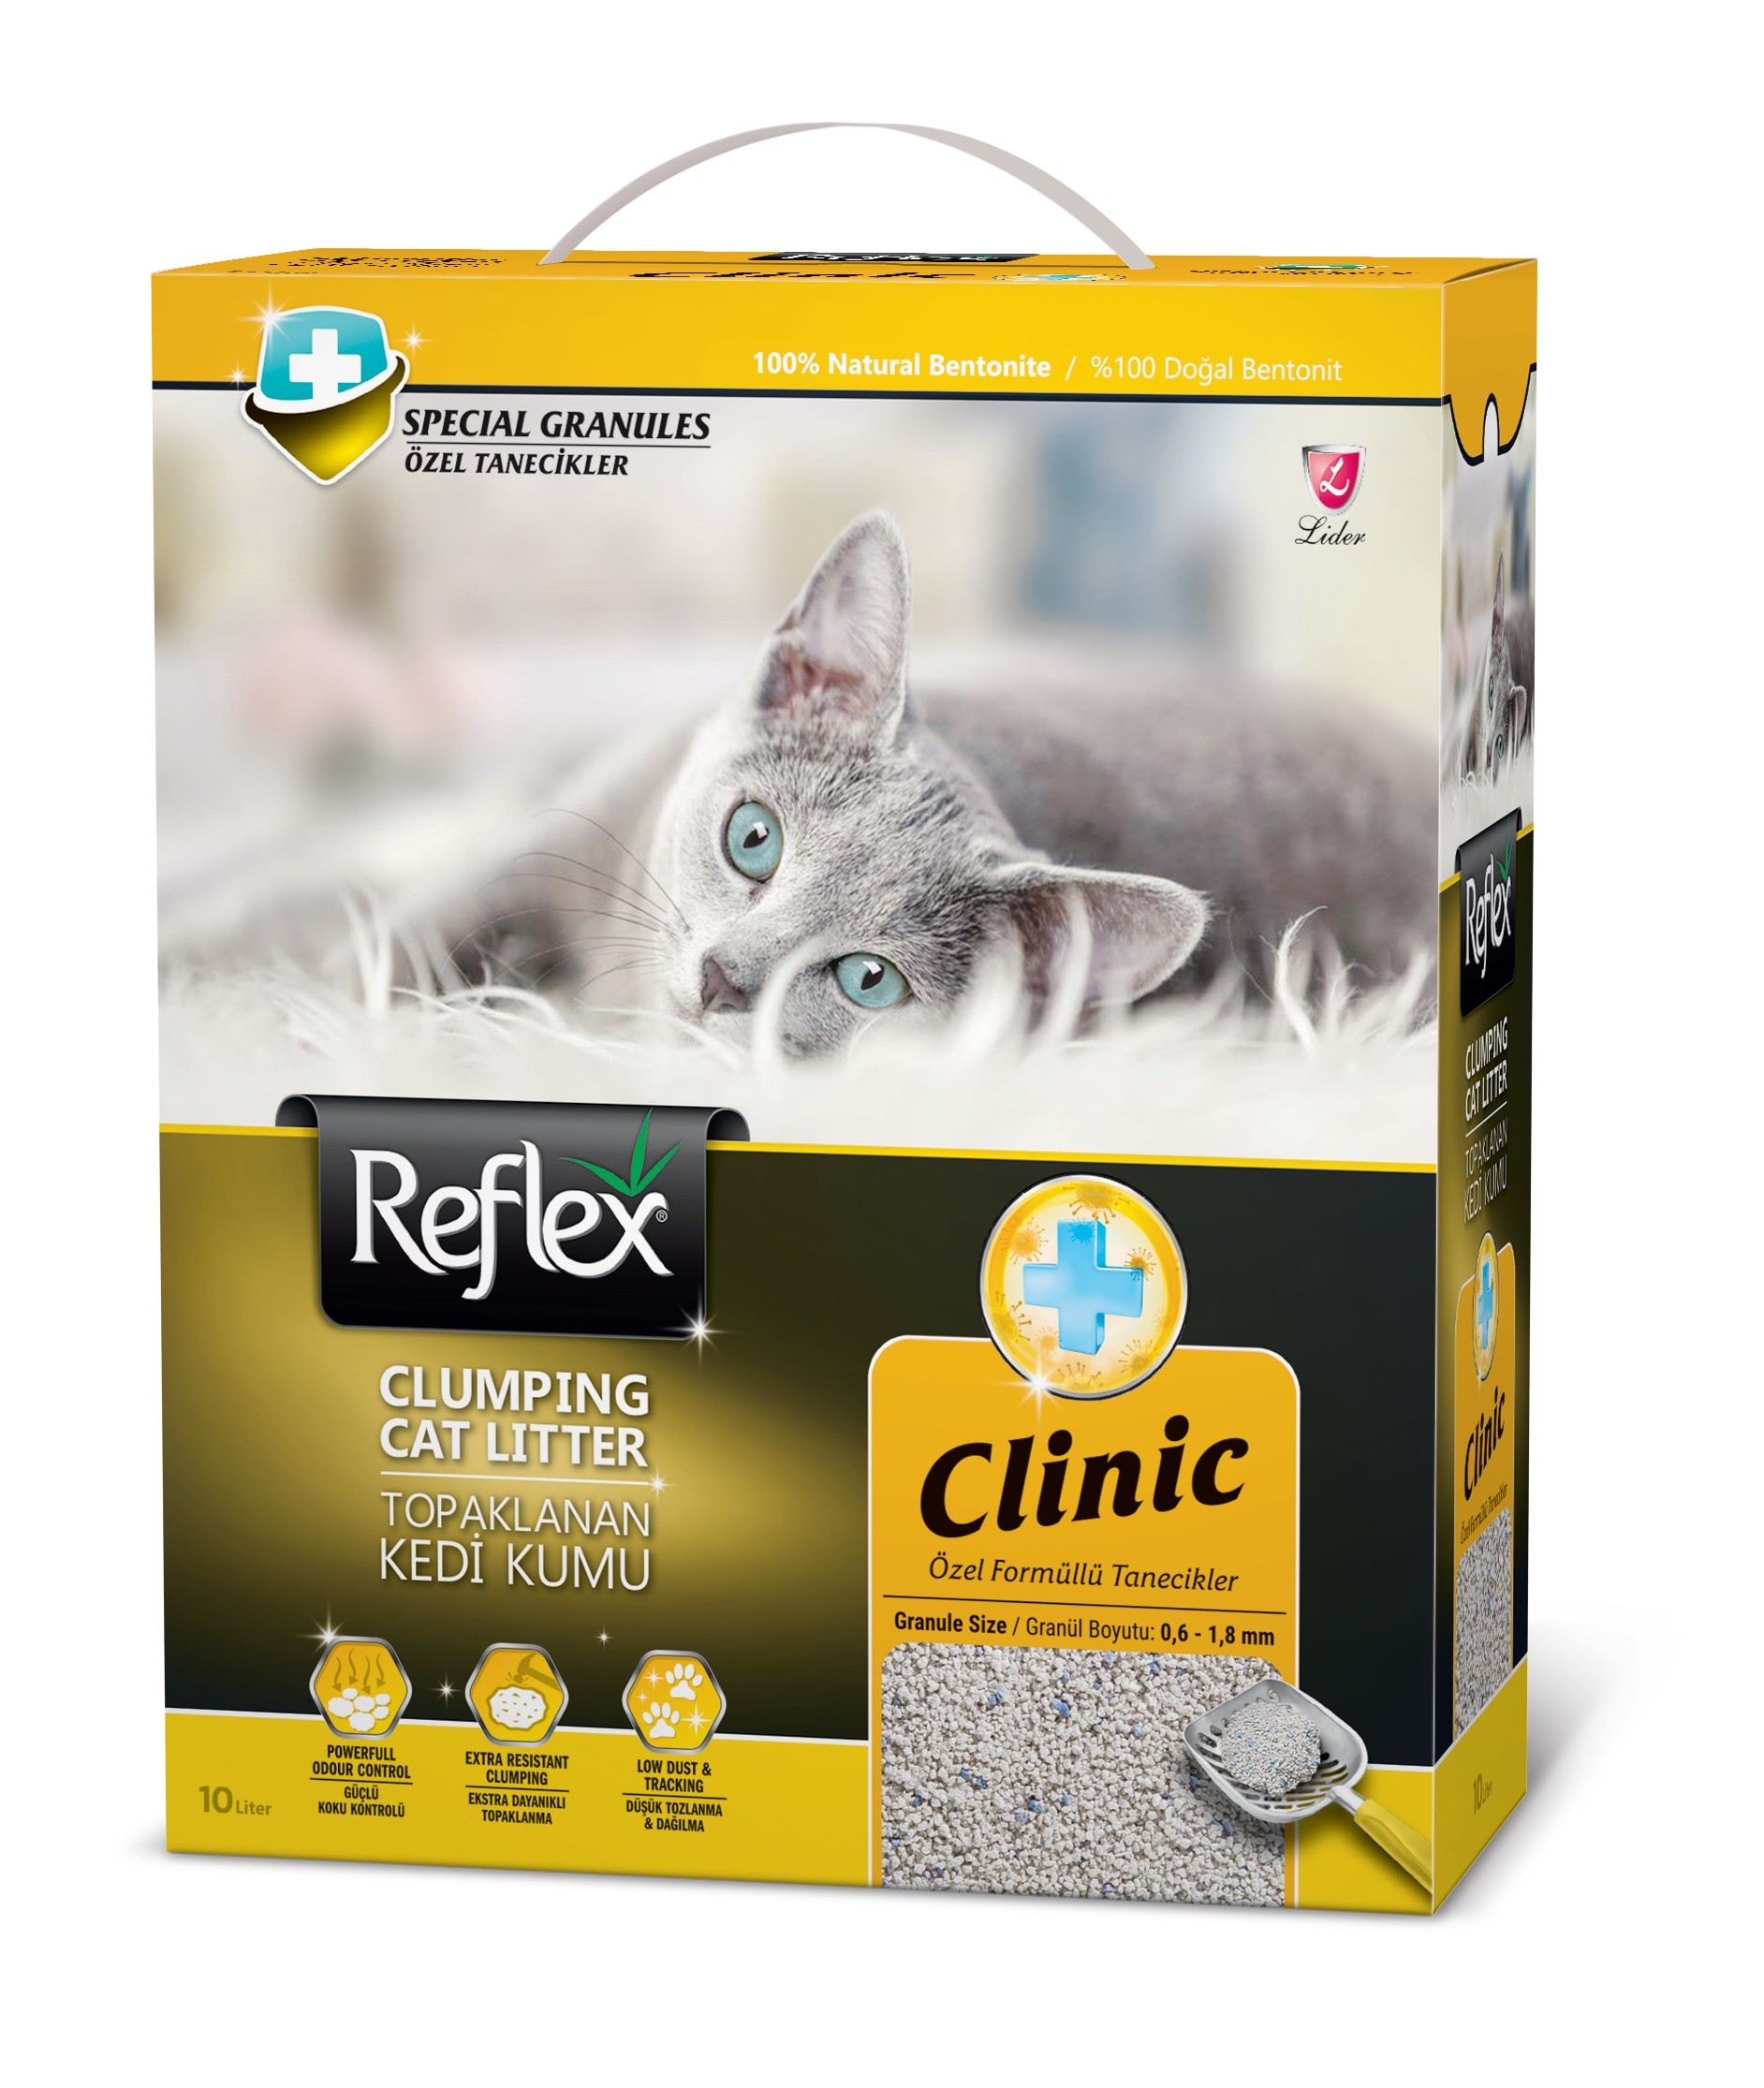 Reflex Clinic Özel Tanecik Formüllü Topaklanan Kedi Kumu 10 Lt